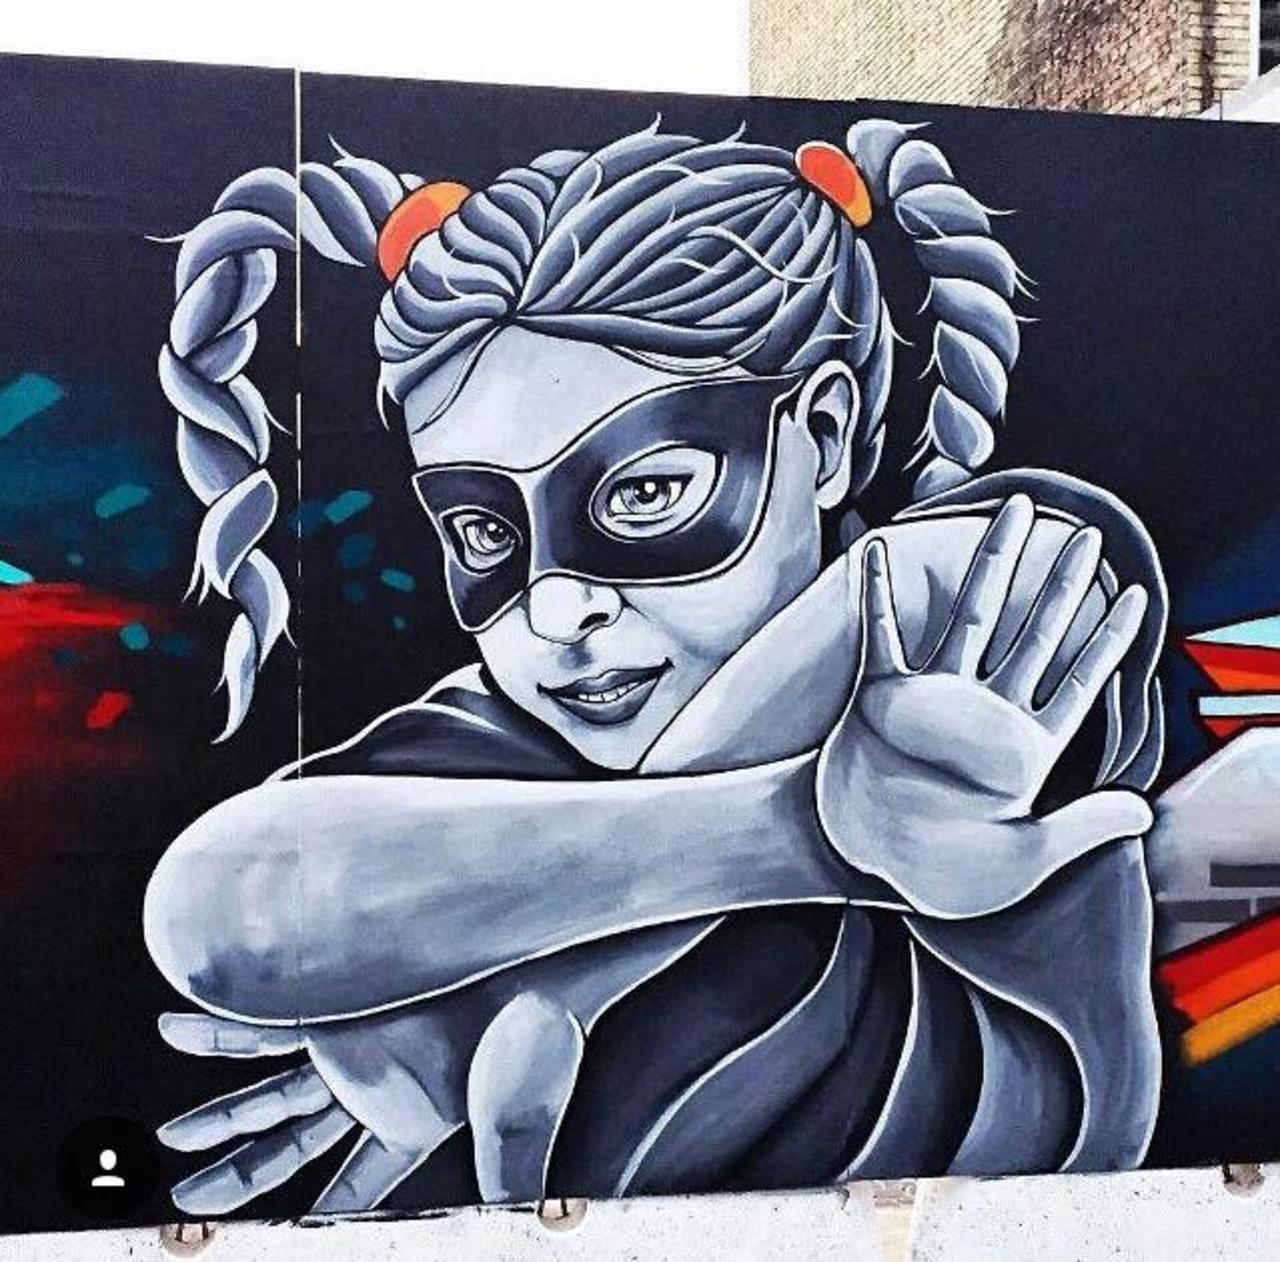 Street Art by Stinehvid 

#art #graffiti #mural #streetart http://t.co/1KteEsYVV6